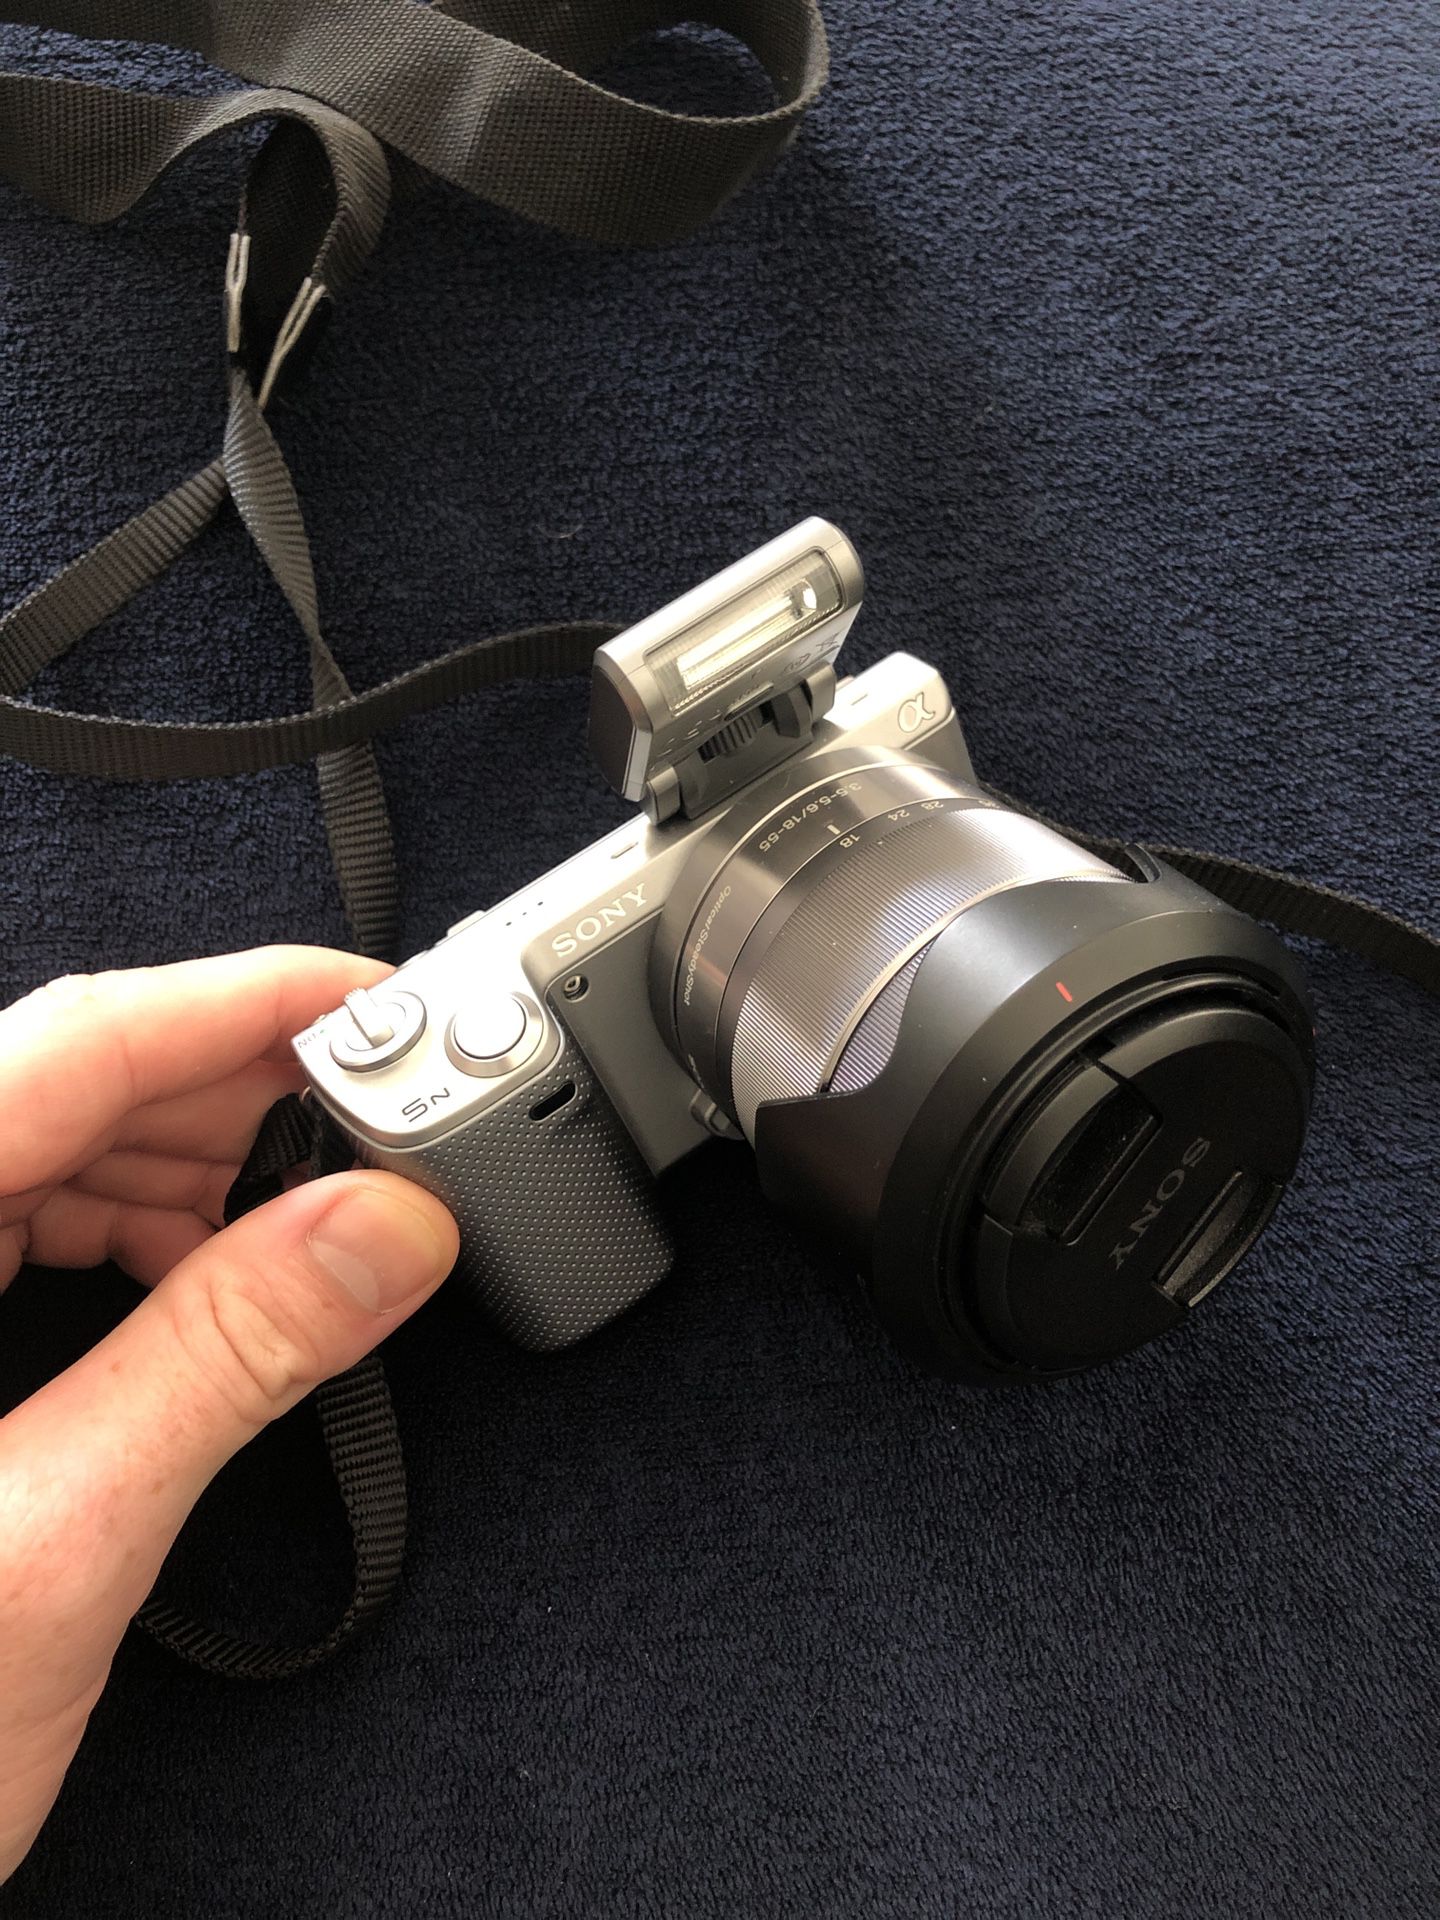 Sony nex 5n digital slr camera with Detachable lens